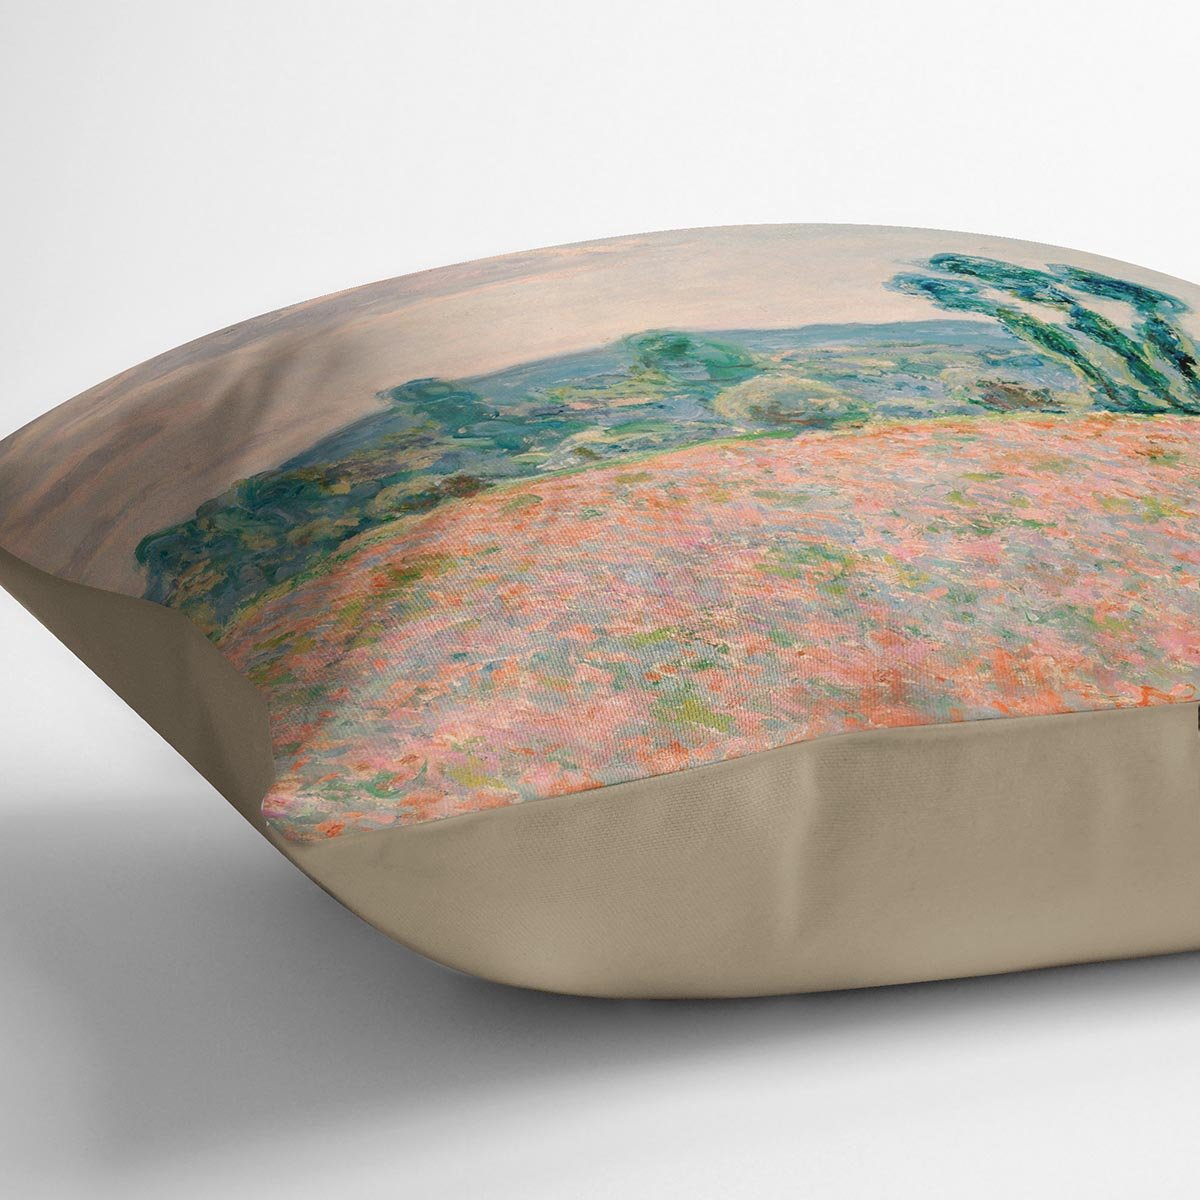 Poppy Field by Monet Throw Pillow